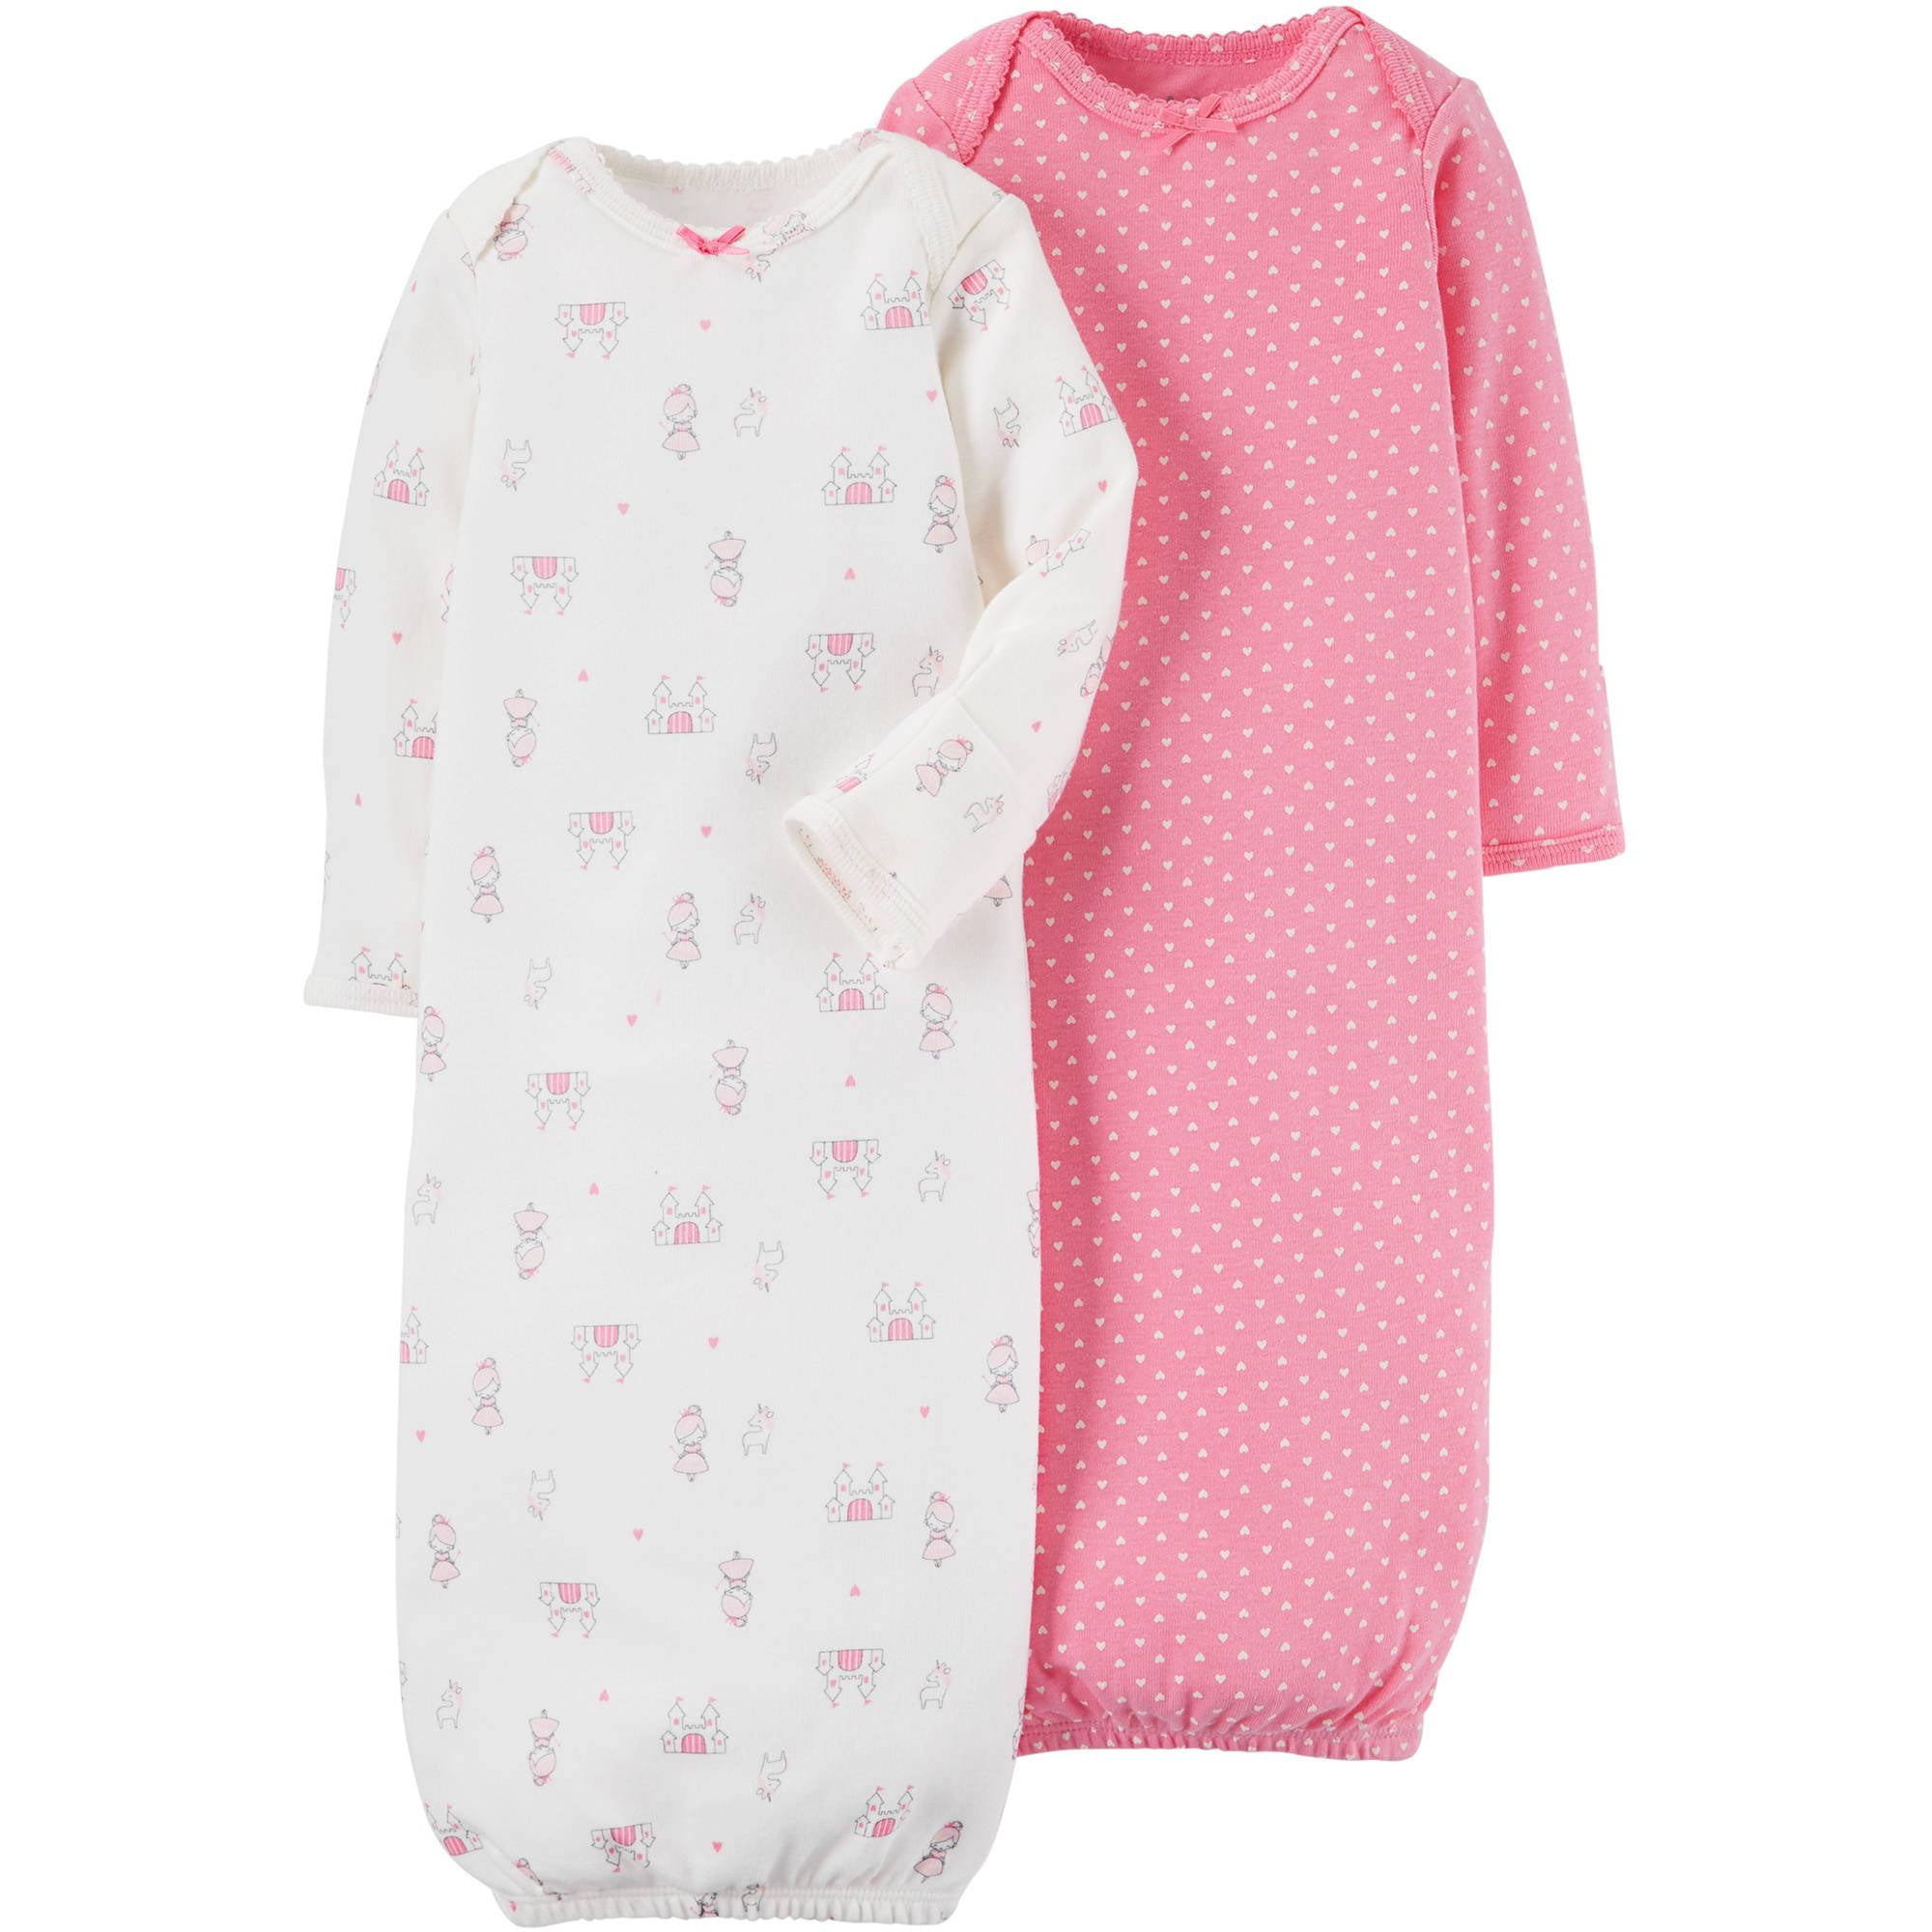 newborn infant gowns